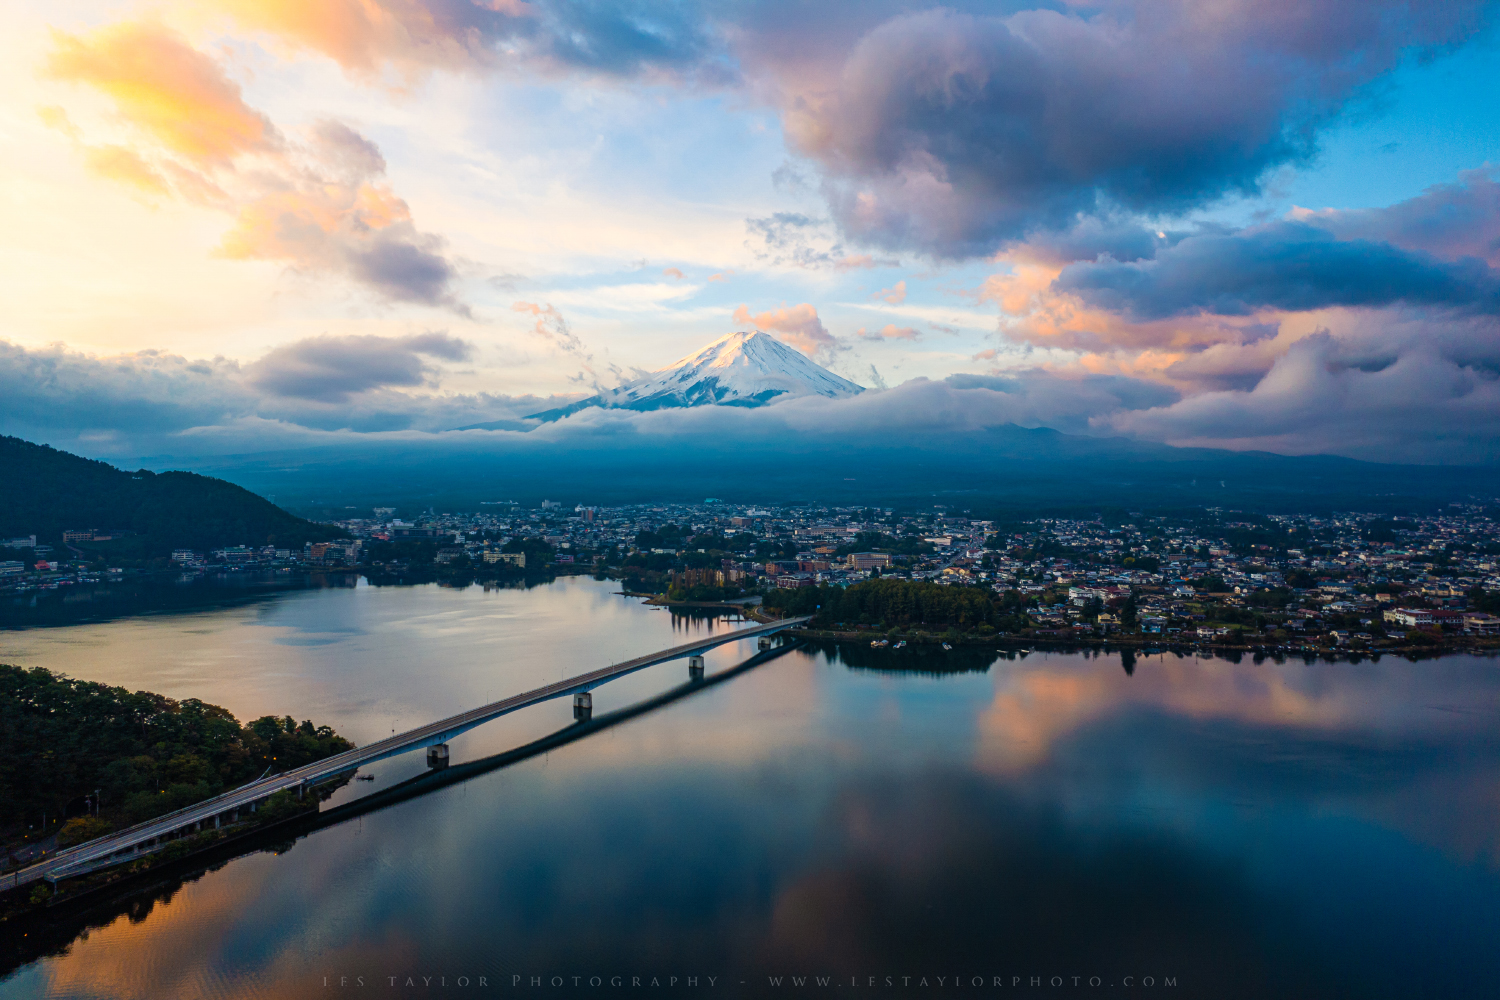 Drone image of Mt Fuji from Lake Kawaguchiko